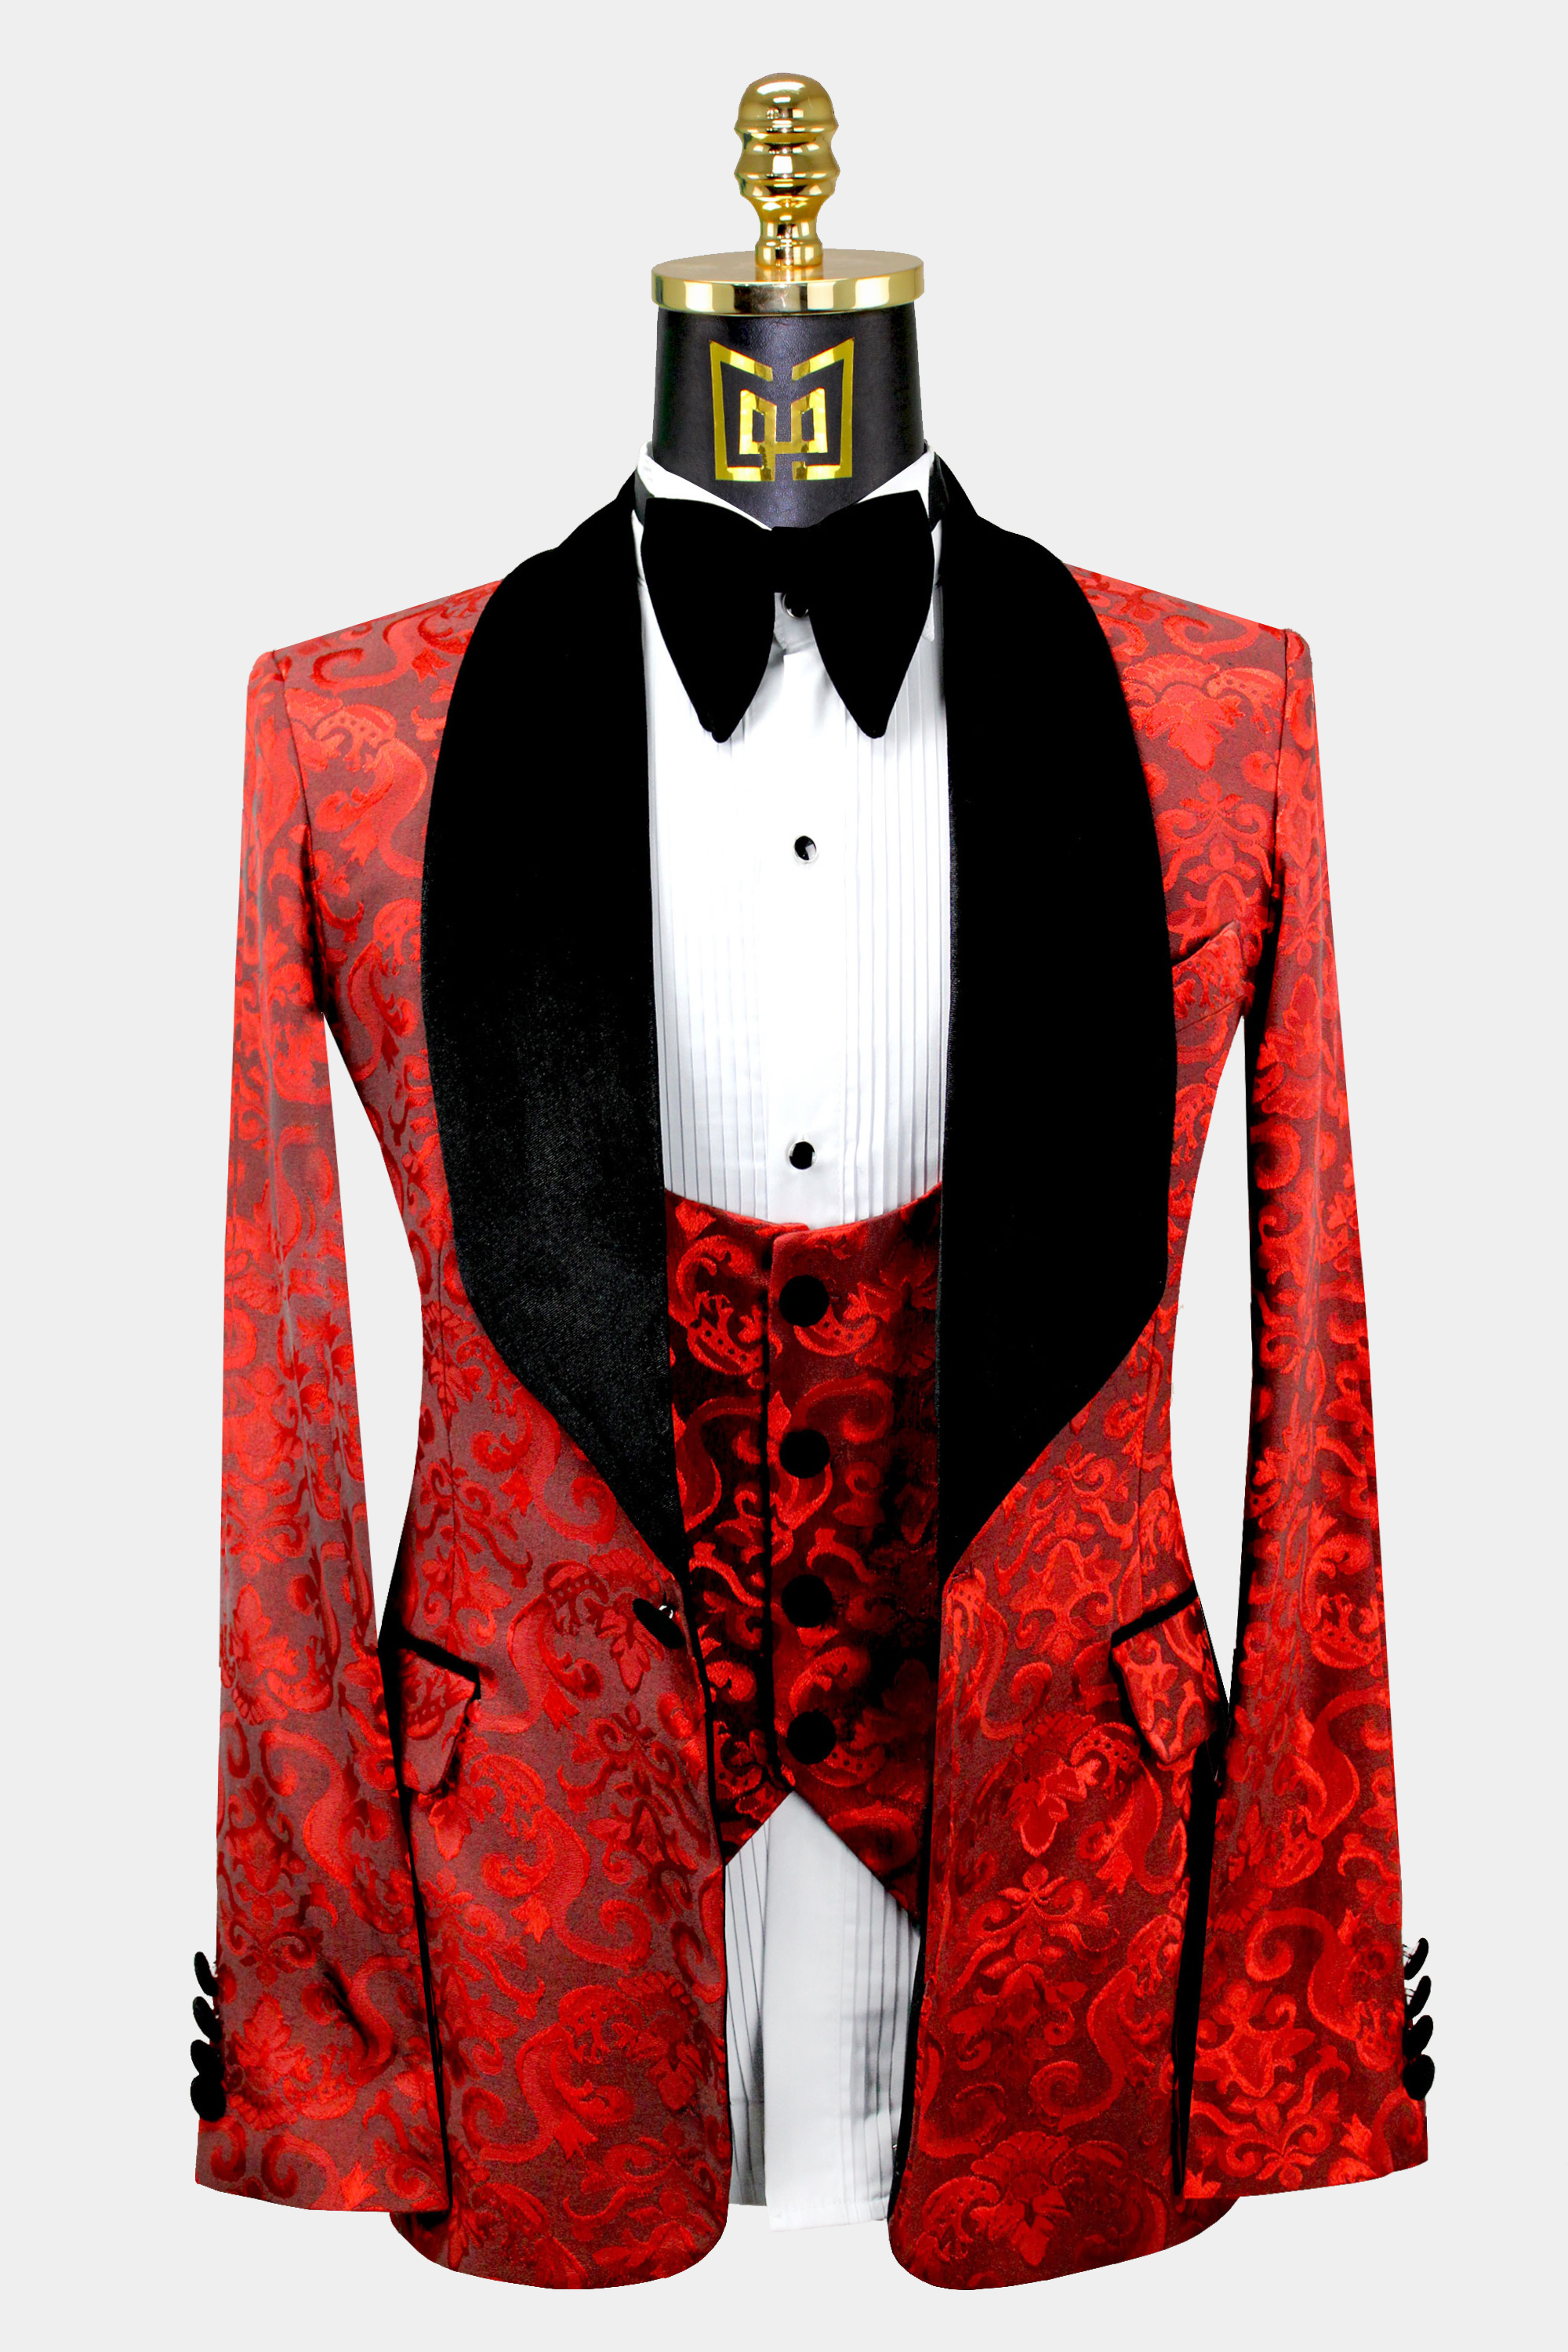 Mens-Damask-Red-and-Black-Tuxedo-Suit-JAcket-from-Gentlemansguru.com_